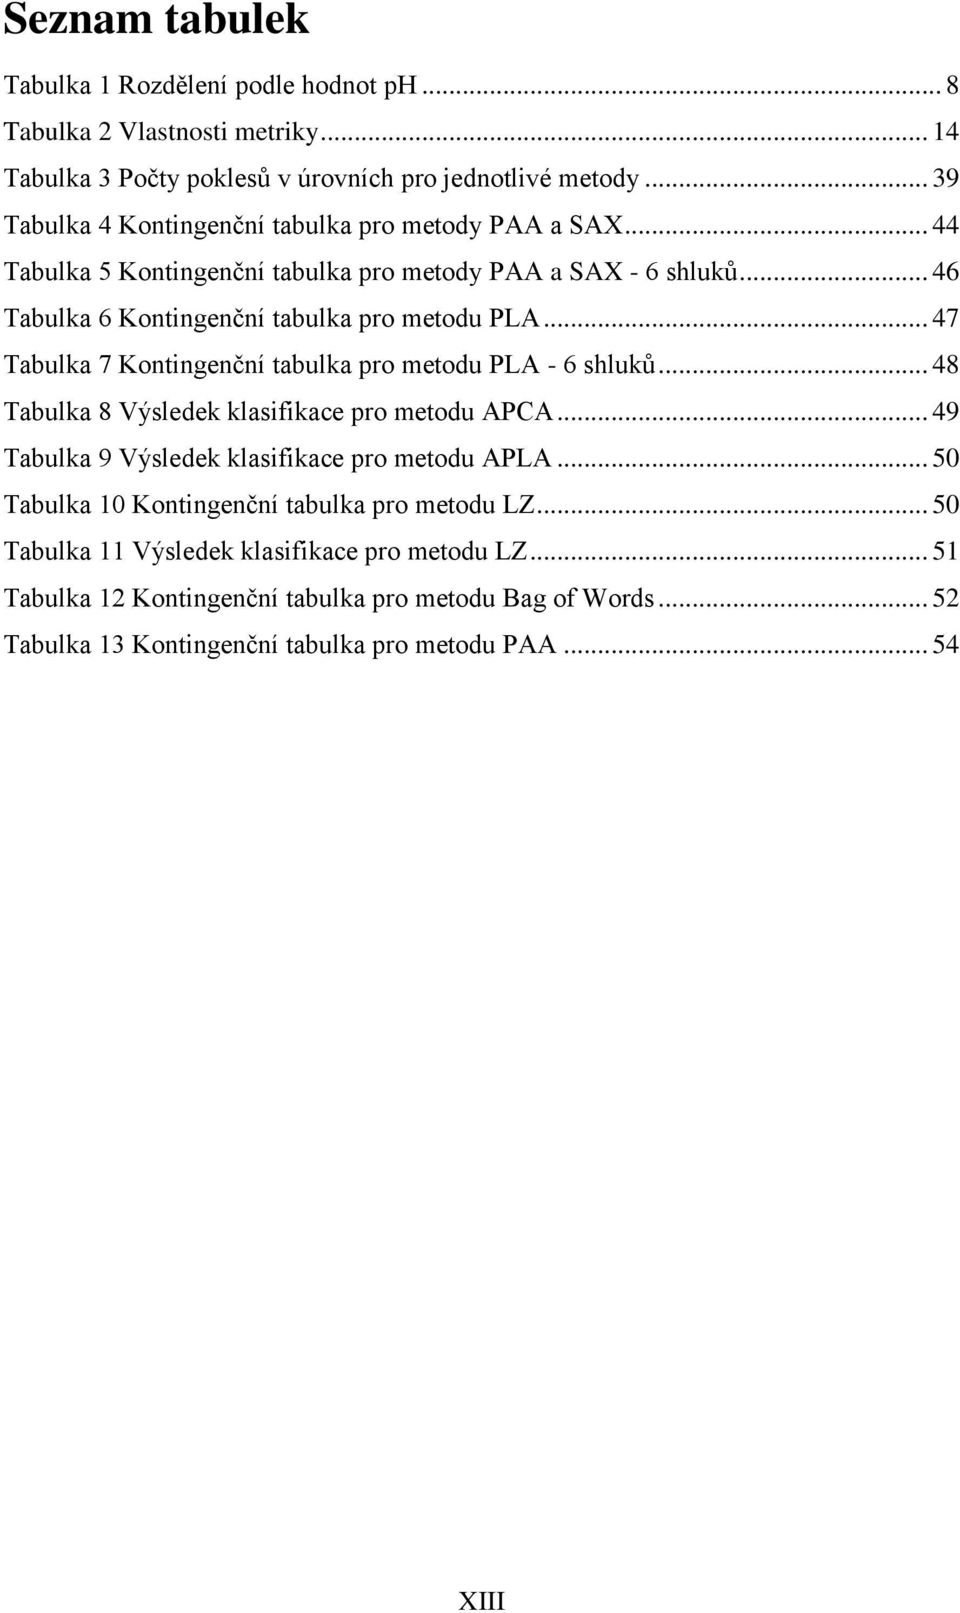 .. 47 Tabulka 7 Kontingenční tabulka pro metodu PLA - 6 shluků... 48 Tabulka 8 Výsledek klasifikace pro metodu APCA... 49 Tabulka 9 Výsledek klasifikace pro metodu APLA.